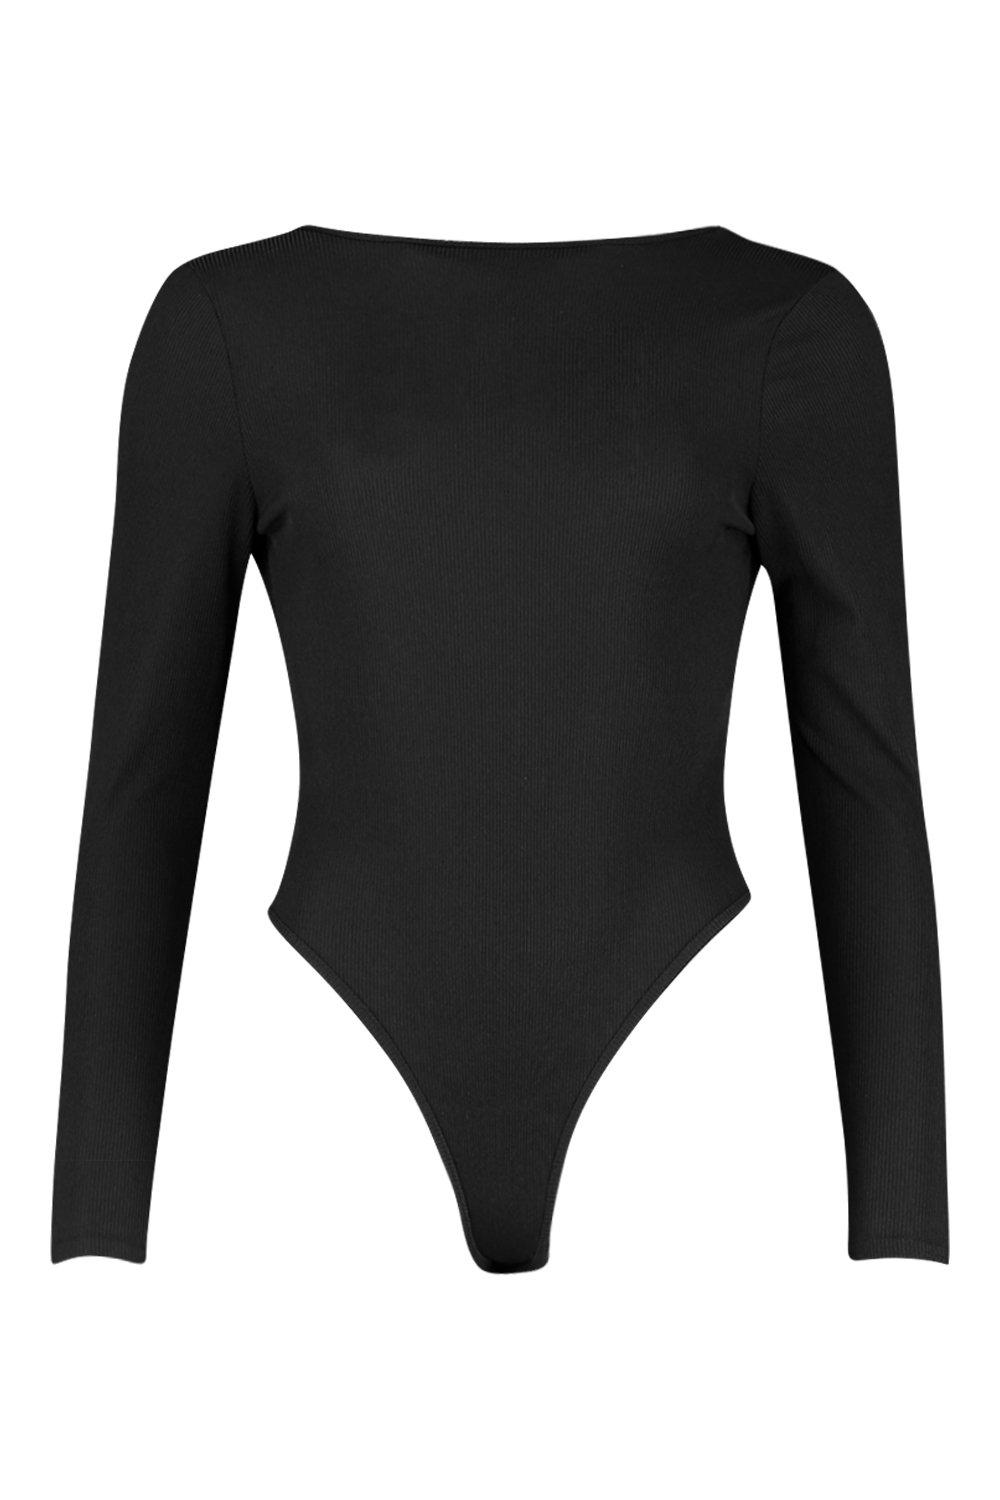 Curves Black Ribbed Jersey Long Sleeve Keyhole Bodysuit